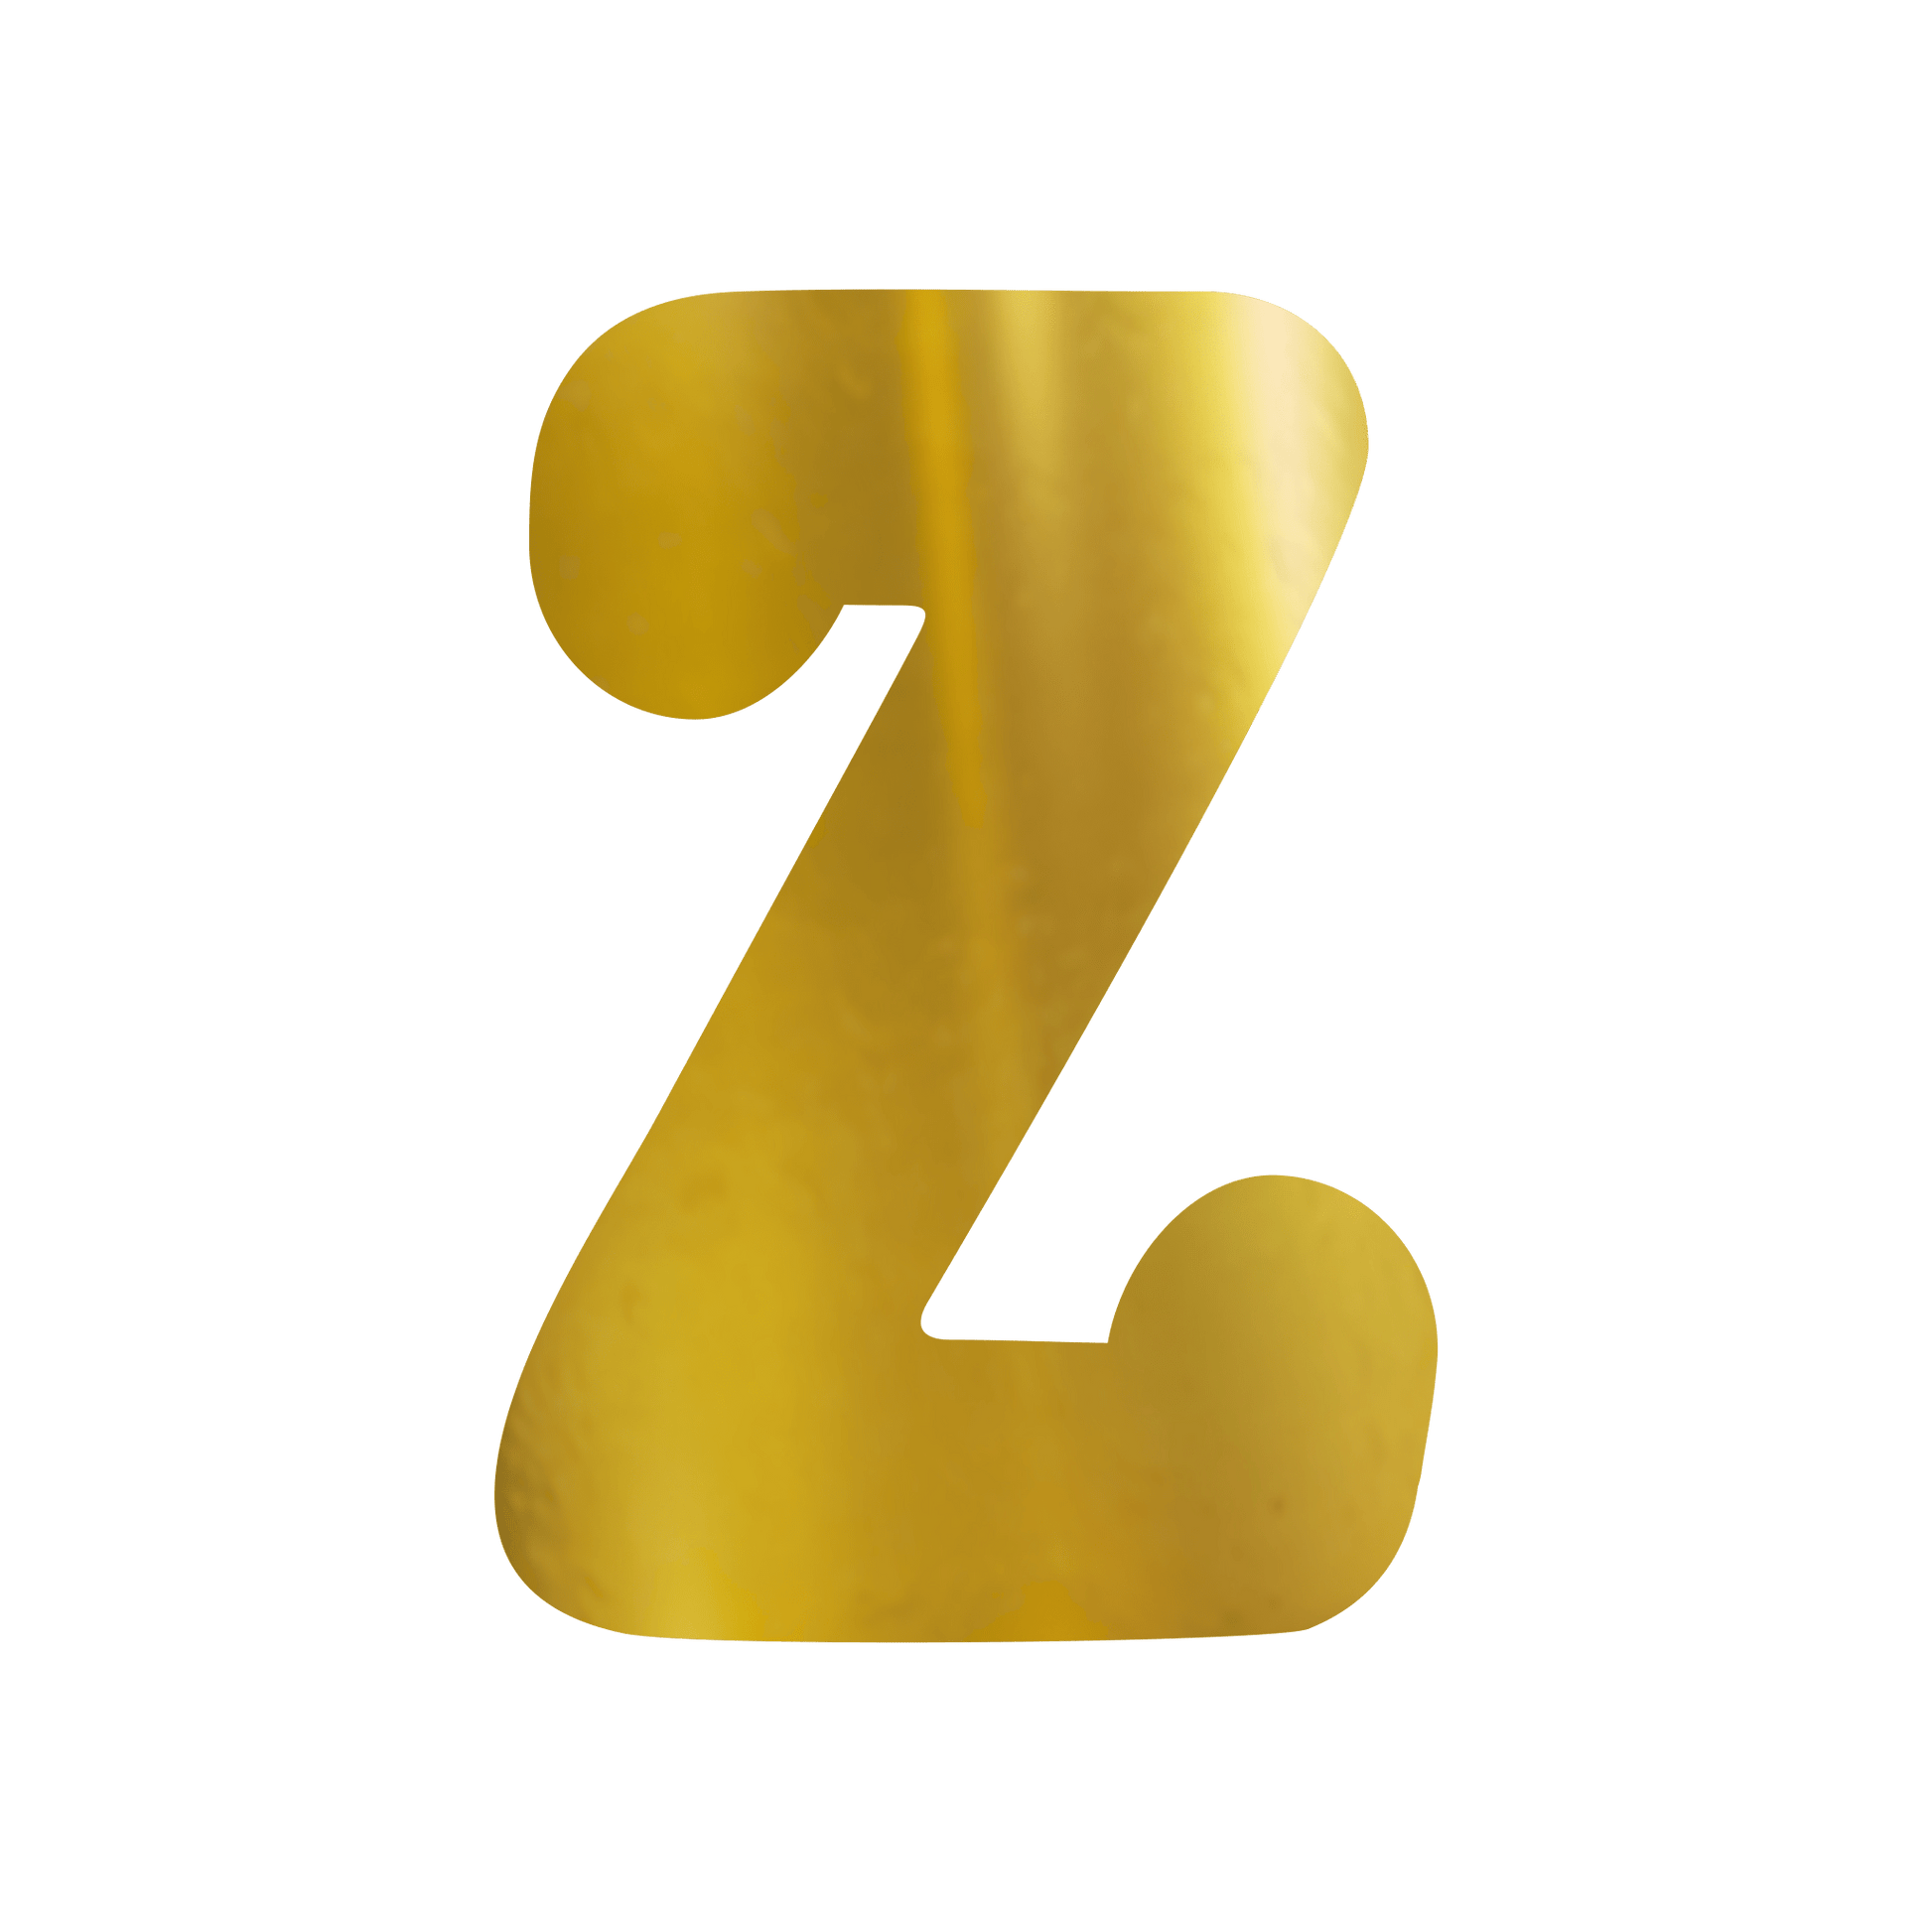 Comemoratio Z Letra de Papel Metalizada 15,3 cm Dourada - G2 - 01 un.